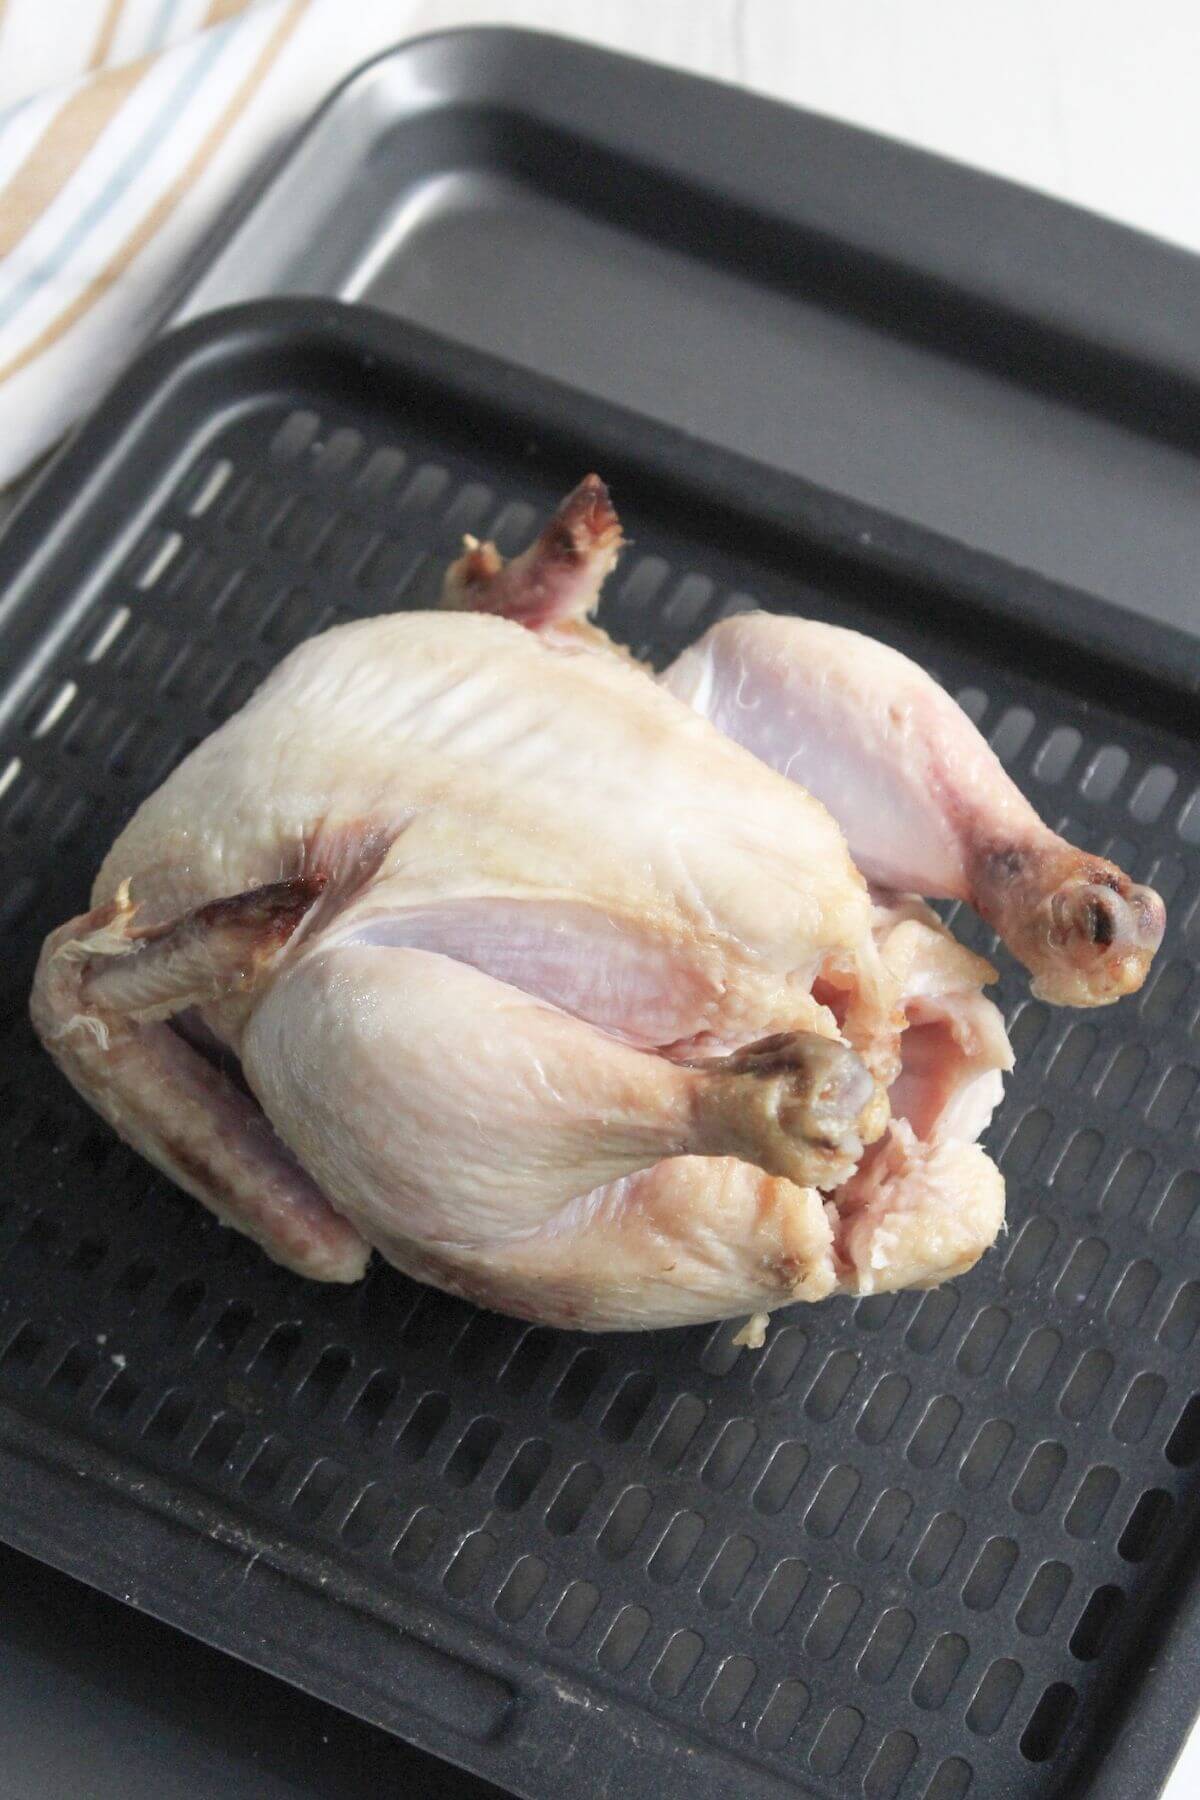 Thawed cornish hen on air fryer tray.